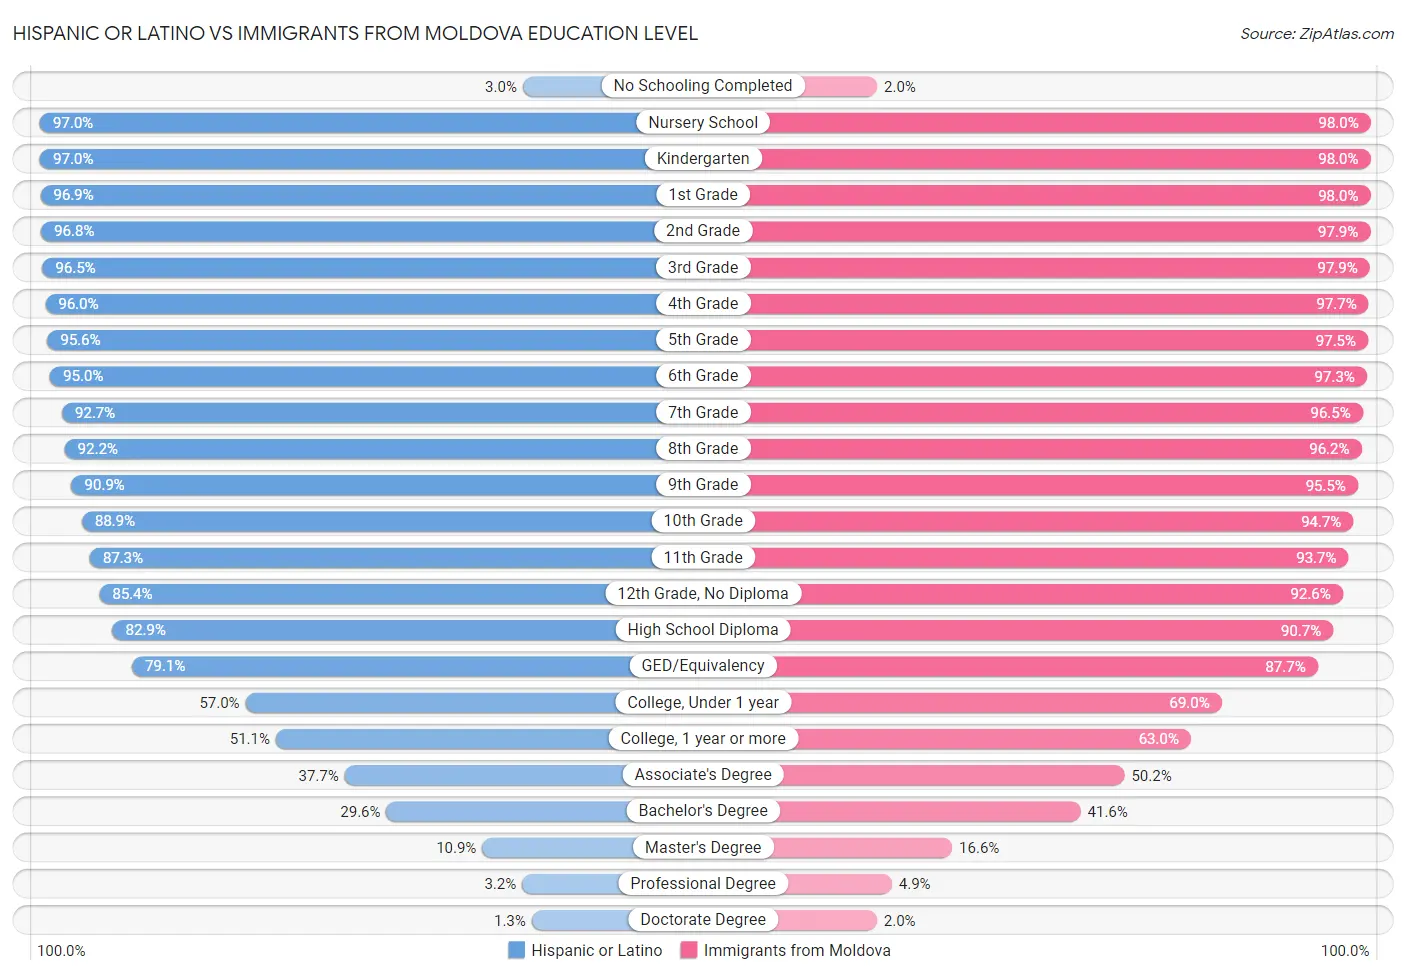 Hispanic or Latino vs Immigrants from Moldova Education Level